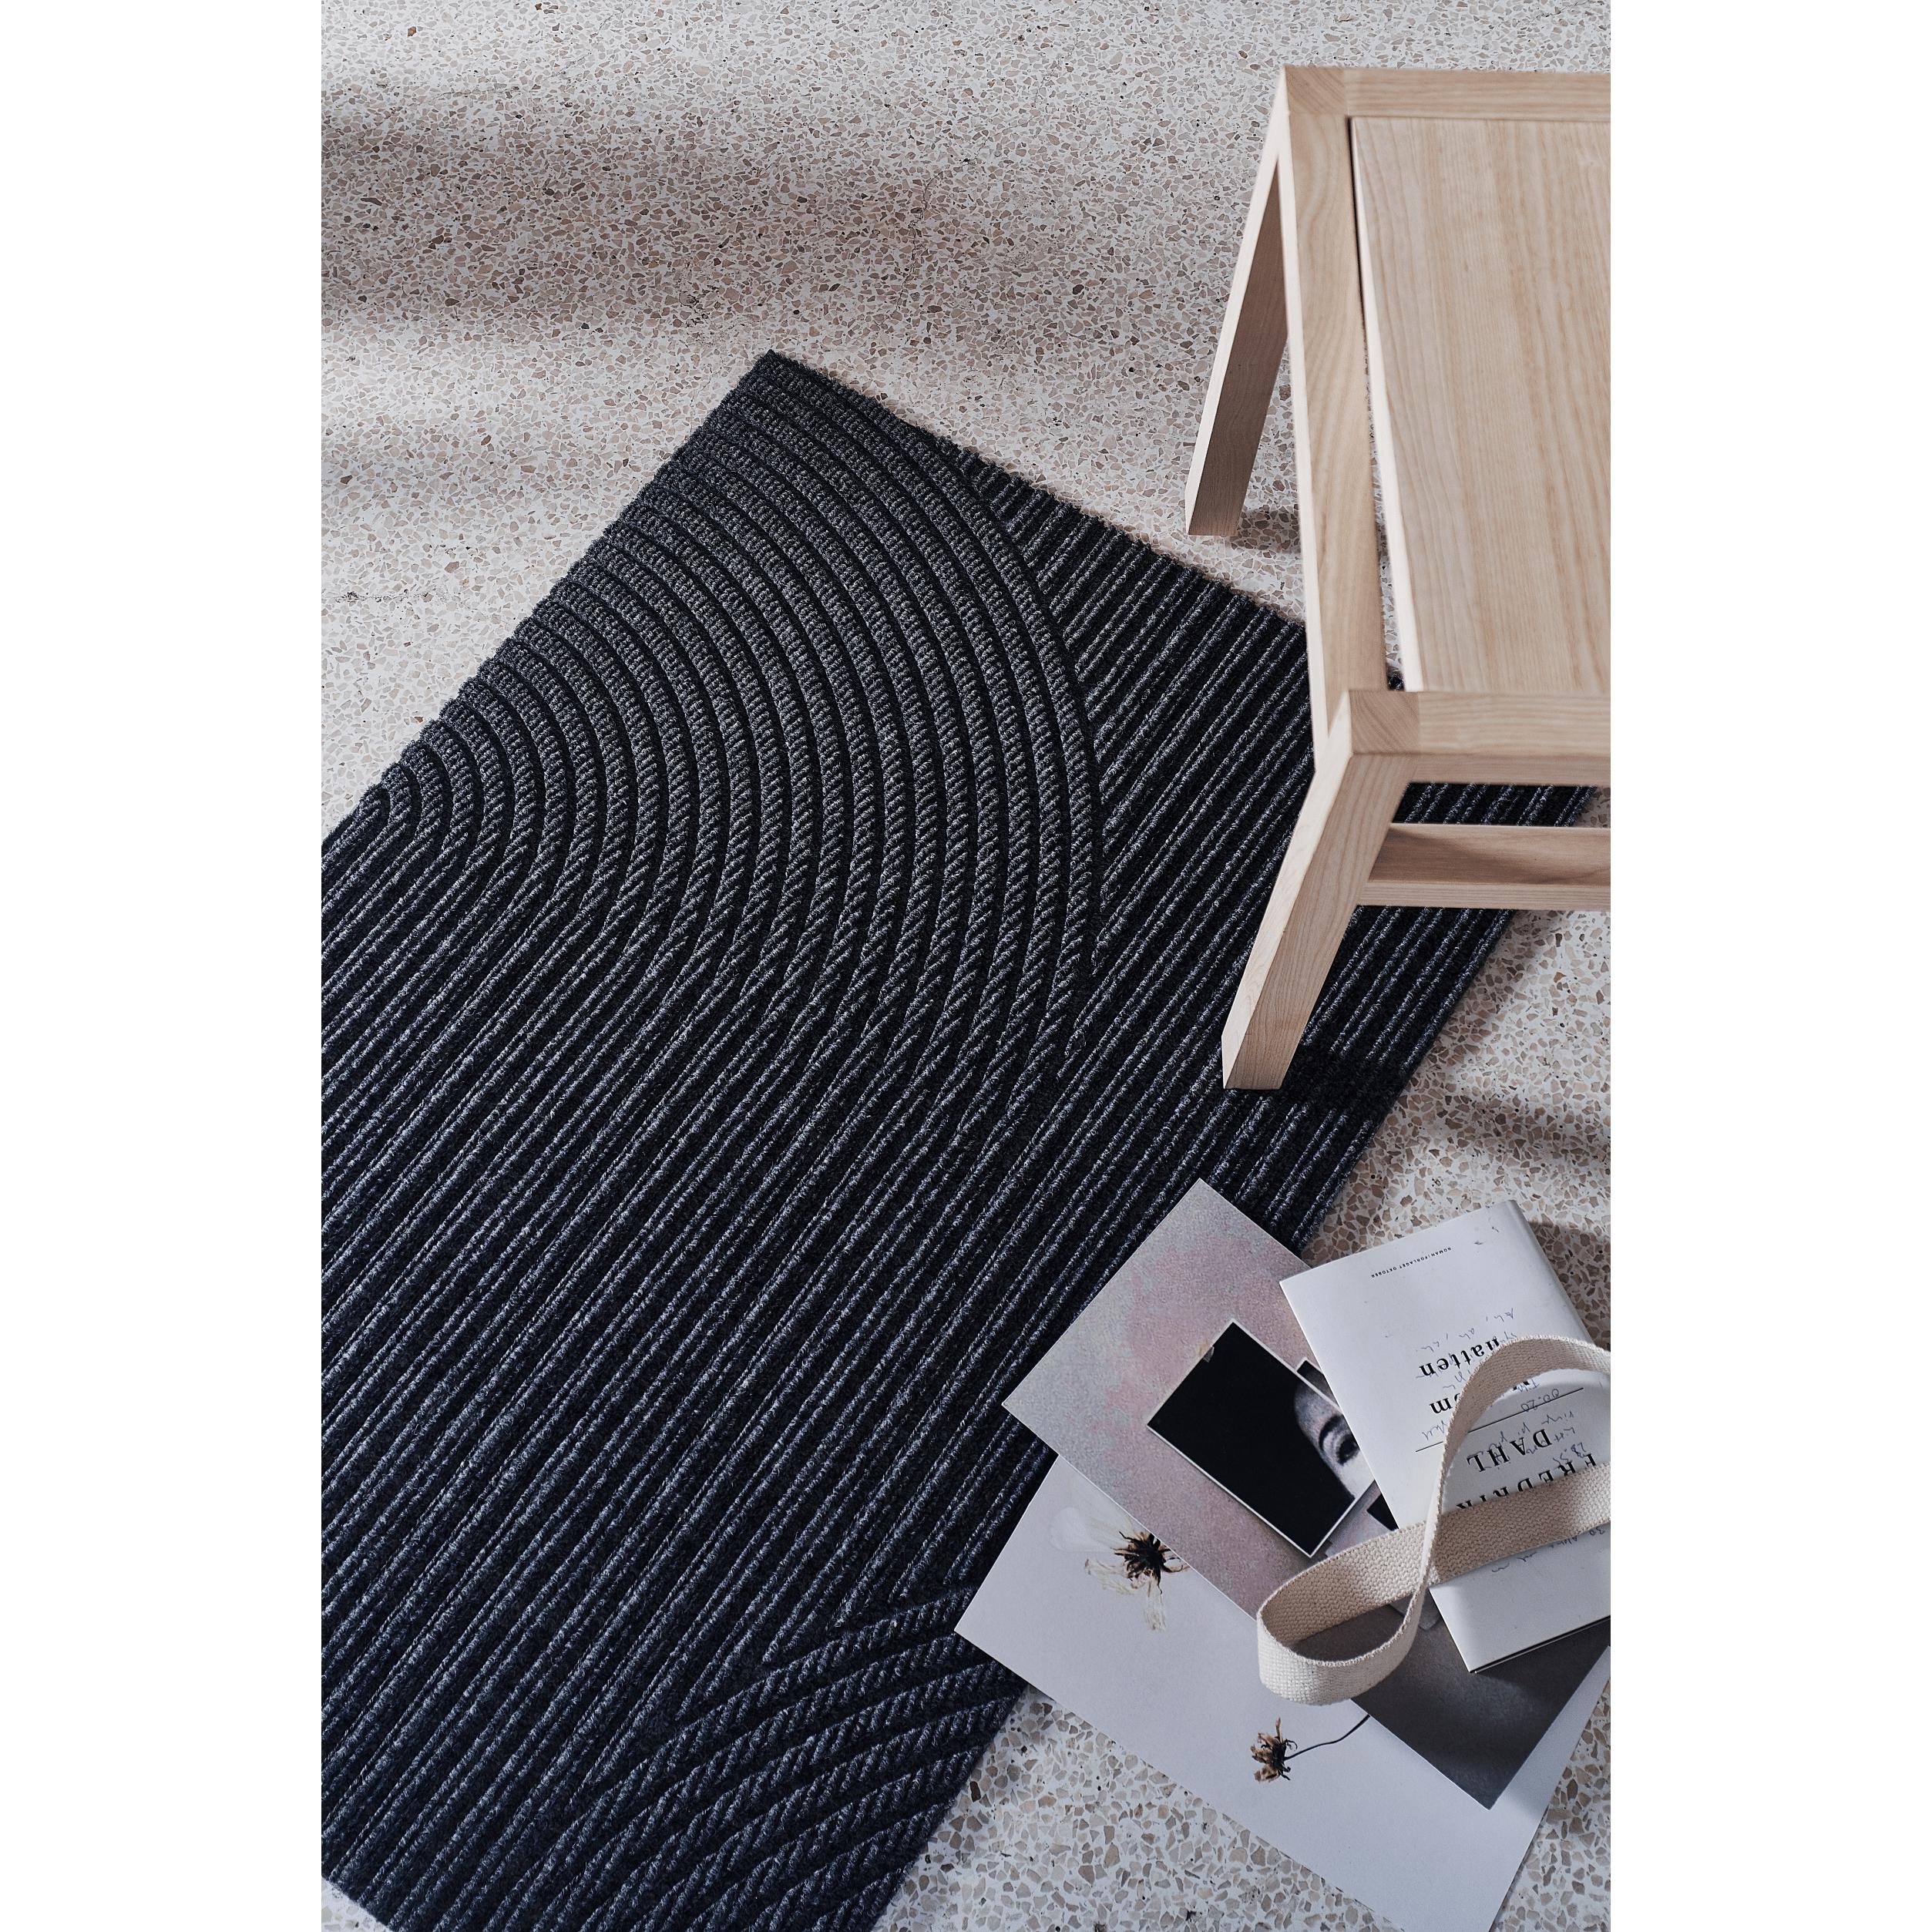 Heymat Doormat Heymat+ Stone, 87x130cm